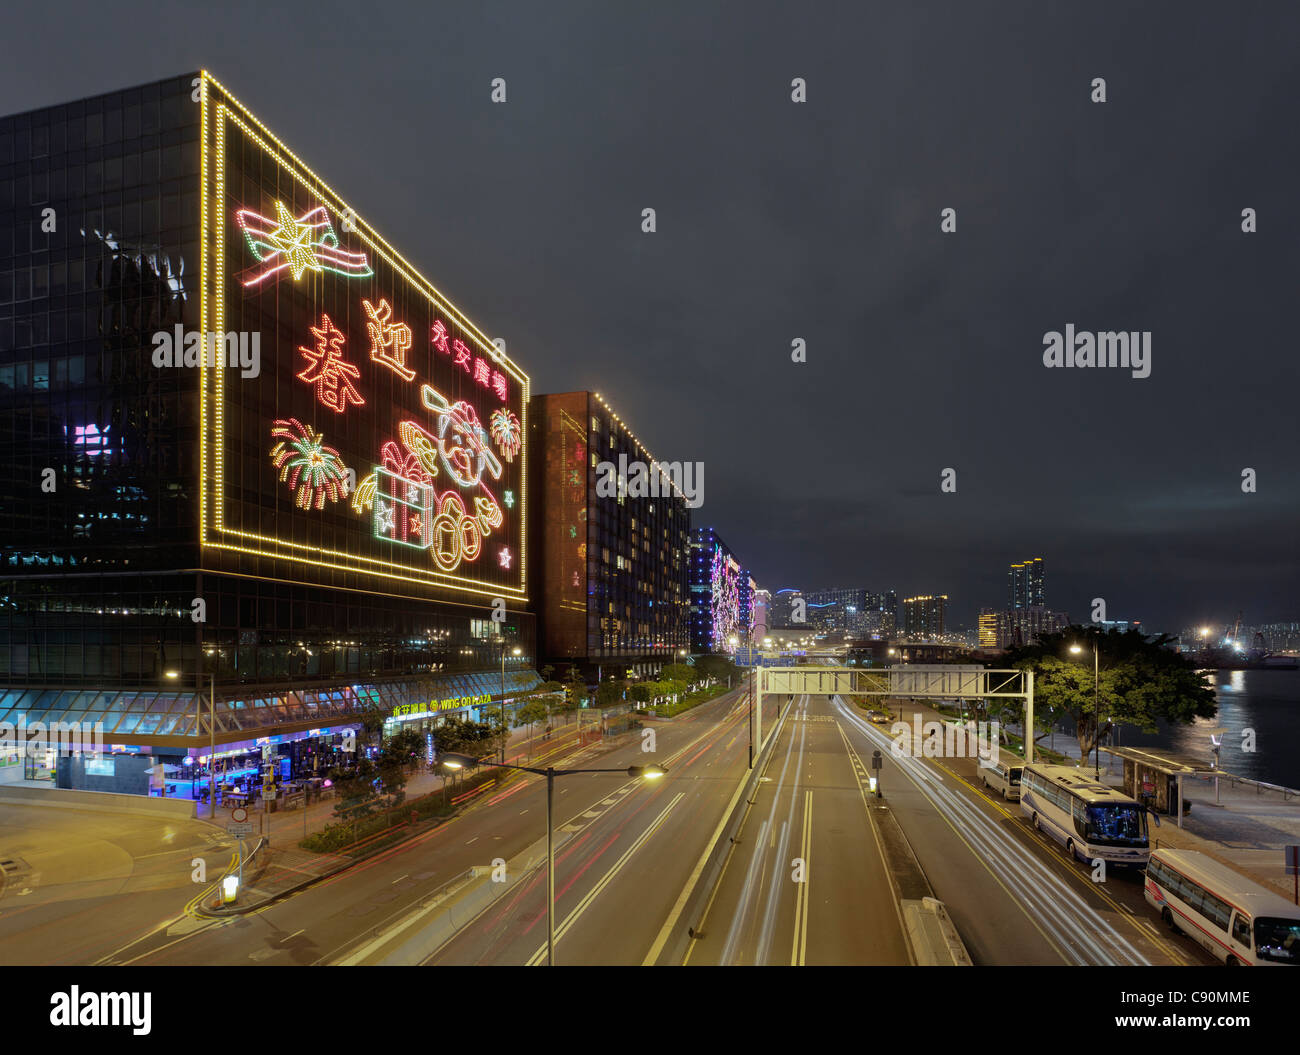 Salisbury Road, Wing on Plaza with Chinese New Year decorations, Kowloon Shangri-La Hotel at night, Kowloon, Hong Kong, China Stock Photo